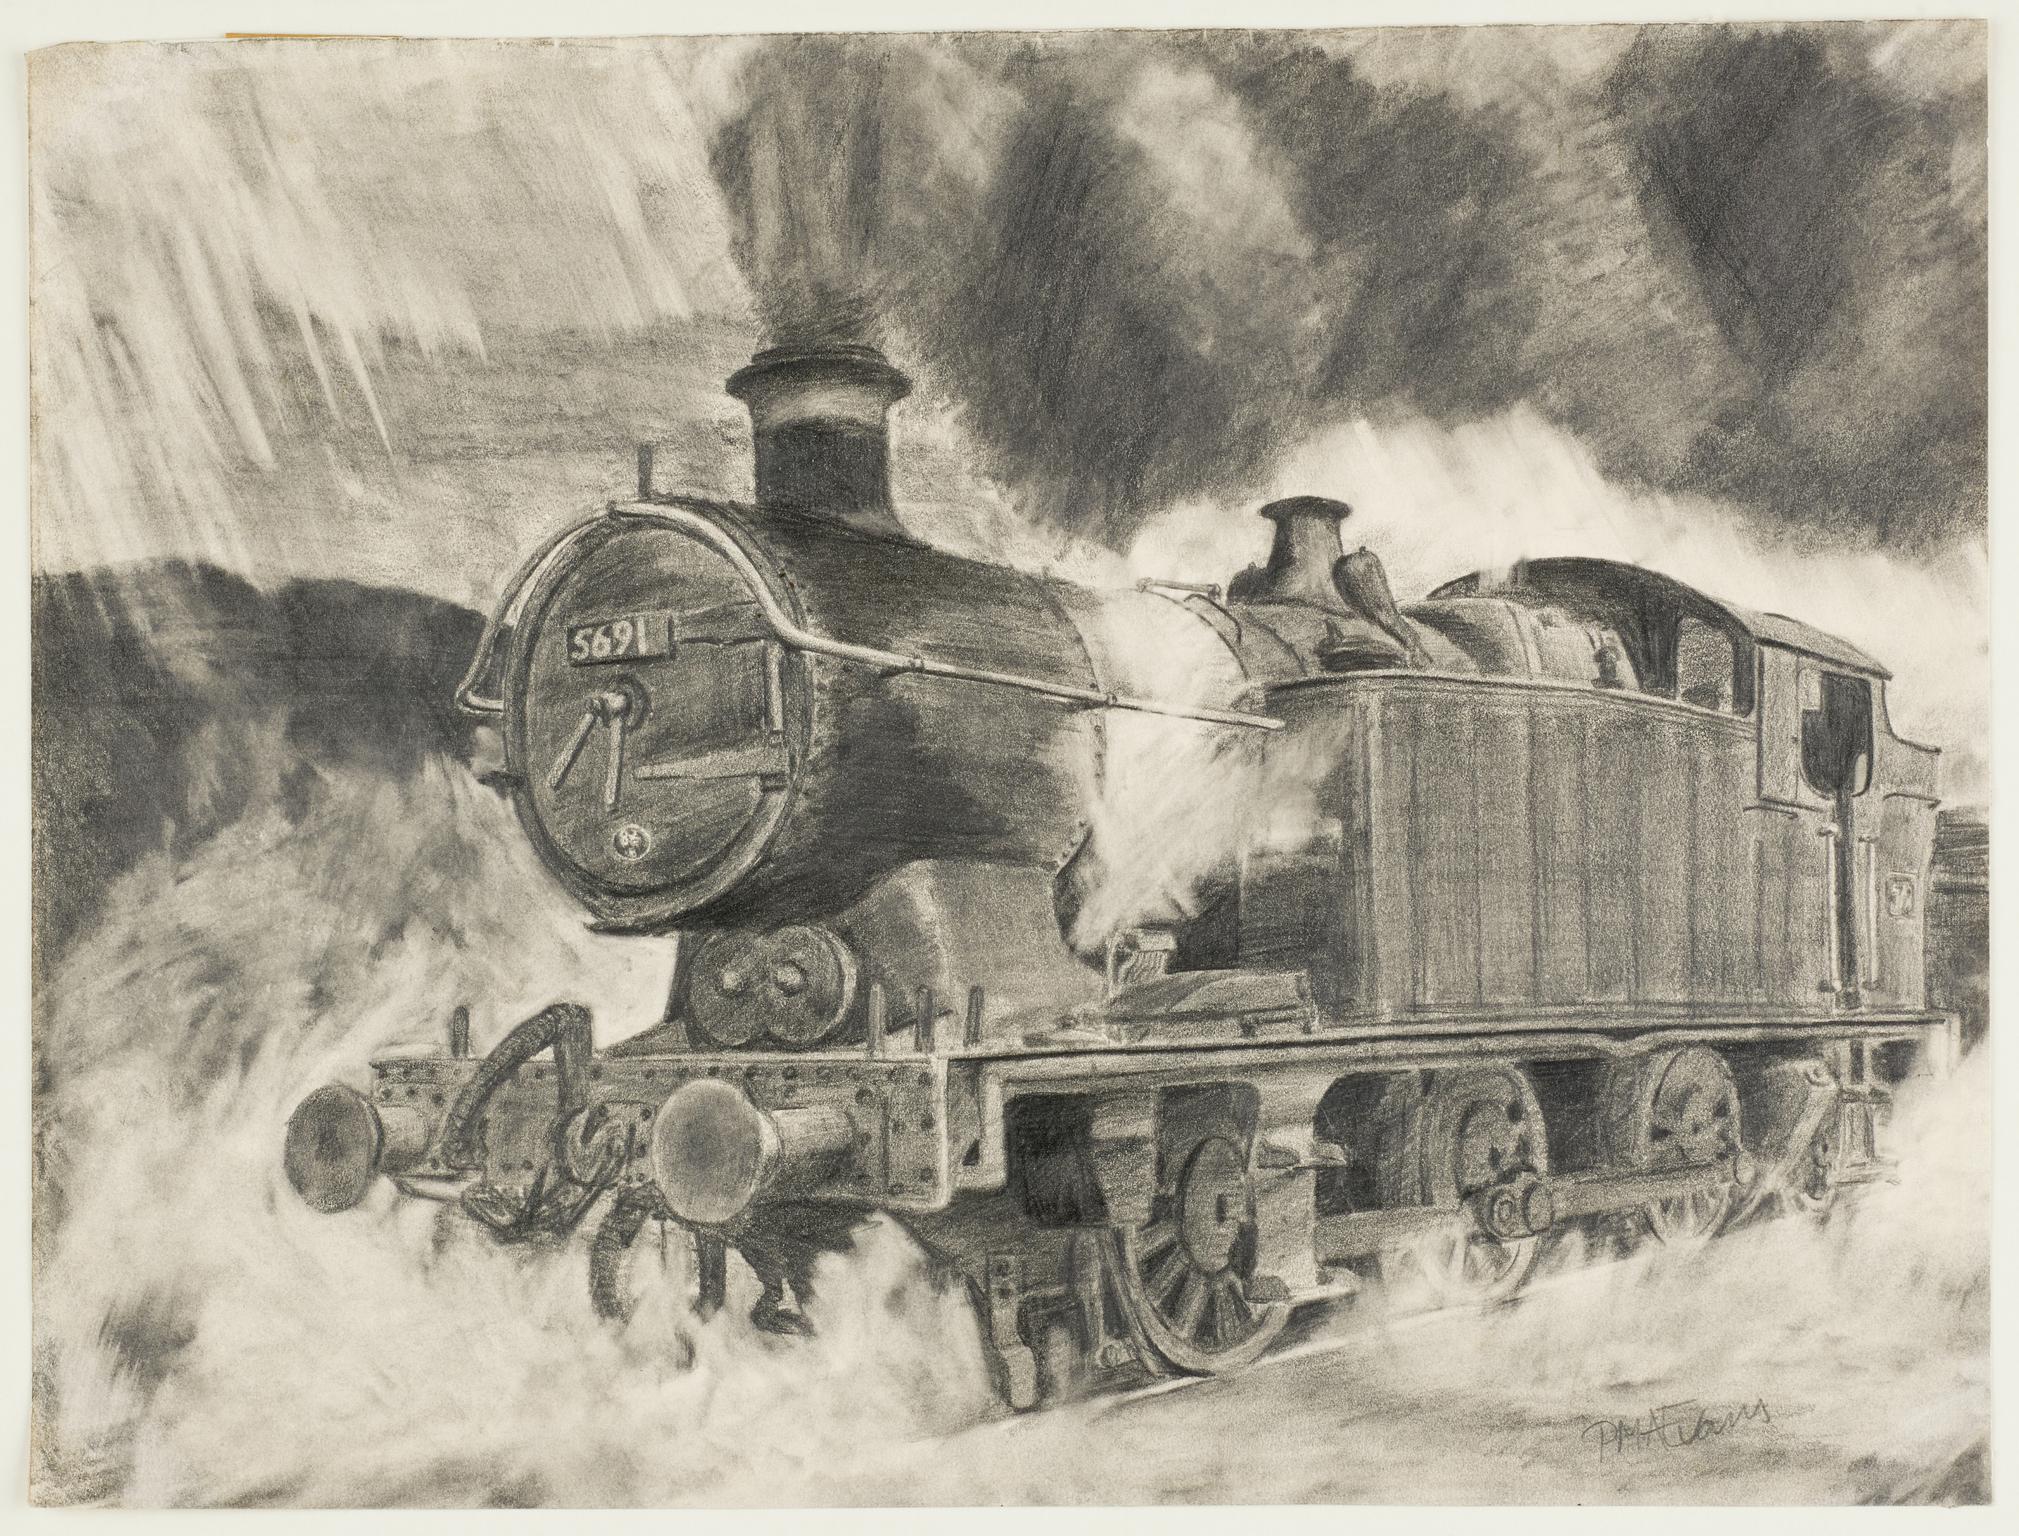 Locomotive No. '5691' - 'Mountain Ash' (drawing)